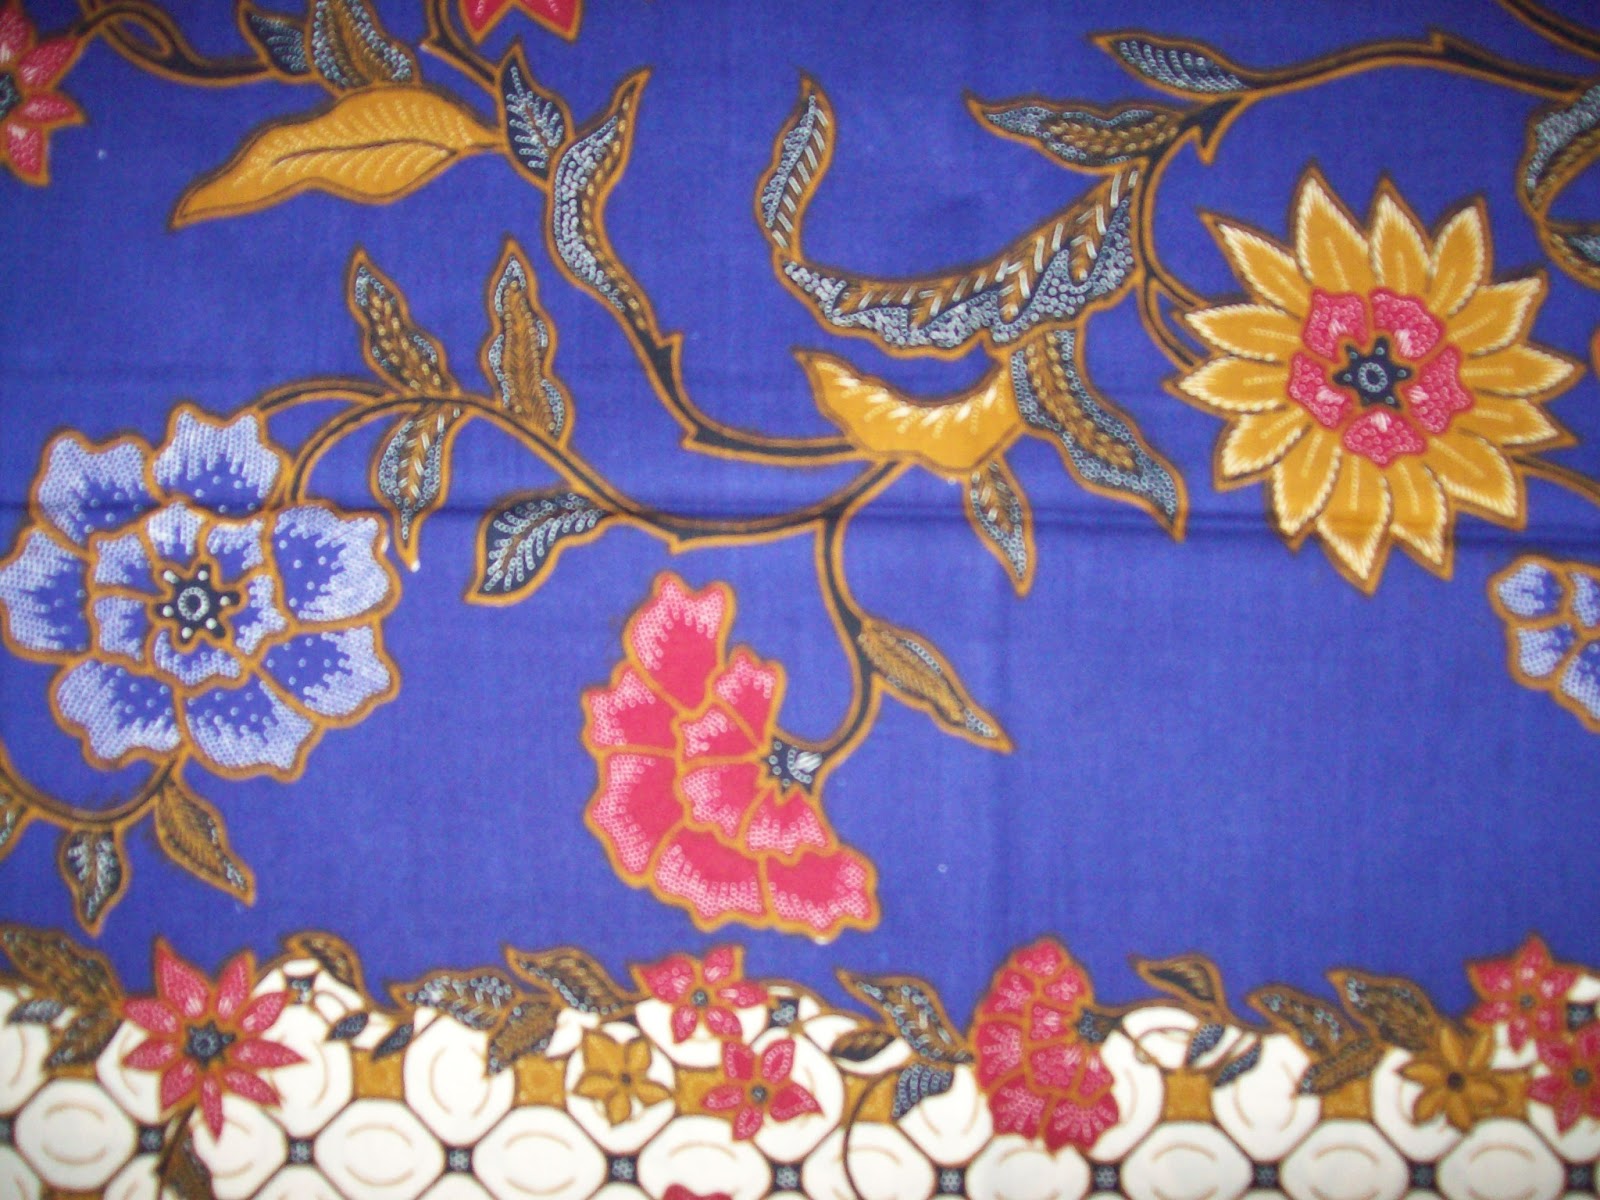 Contoh-contoh Batik Yogyakarta - Contoh Sijix